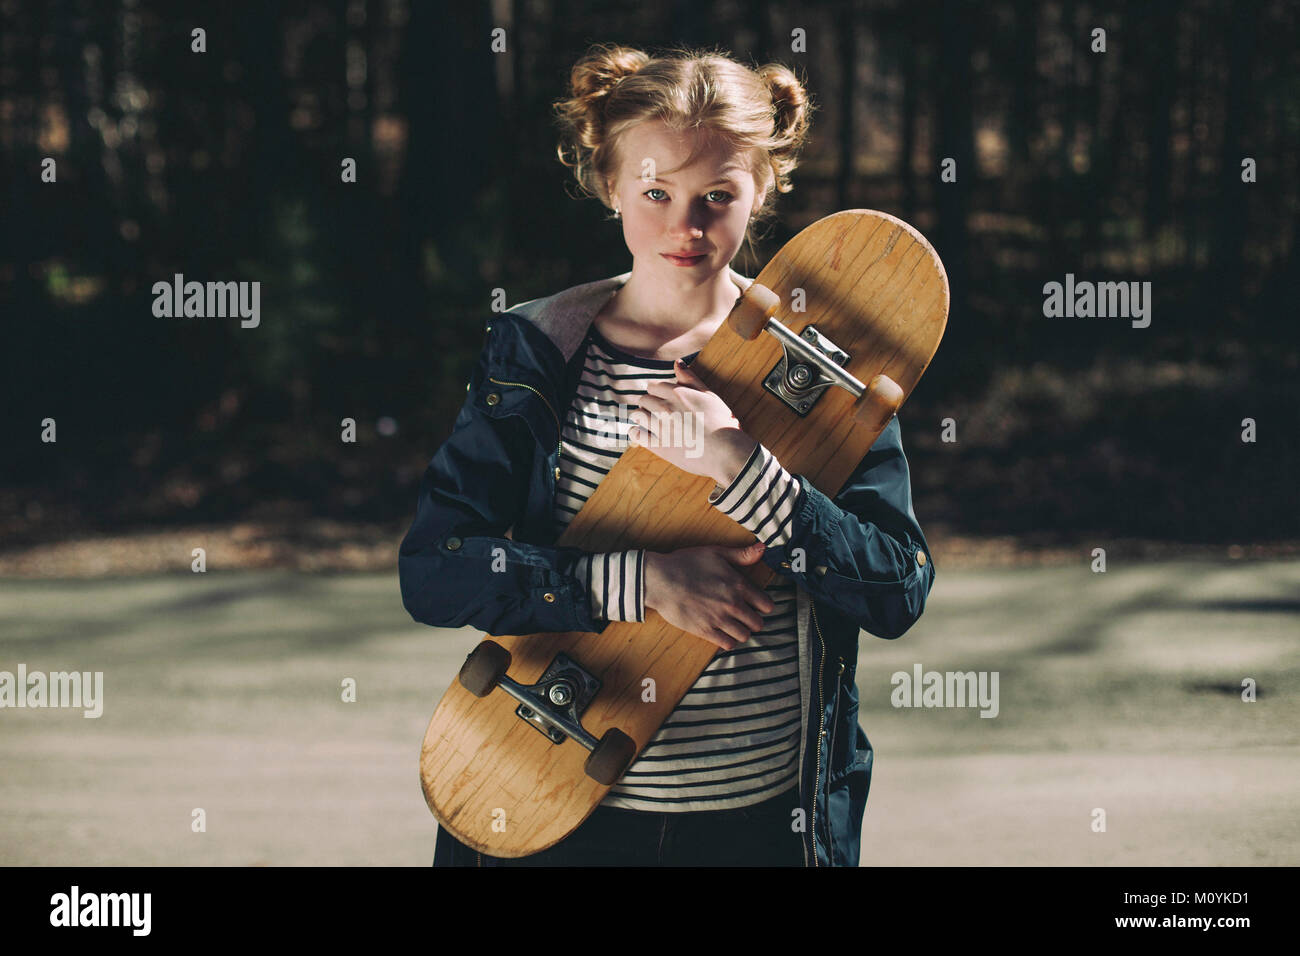 Portrait of Caucasian teenage girl holding skateboard Banque D'Images